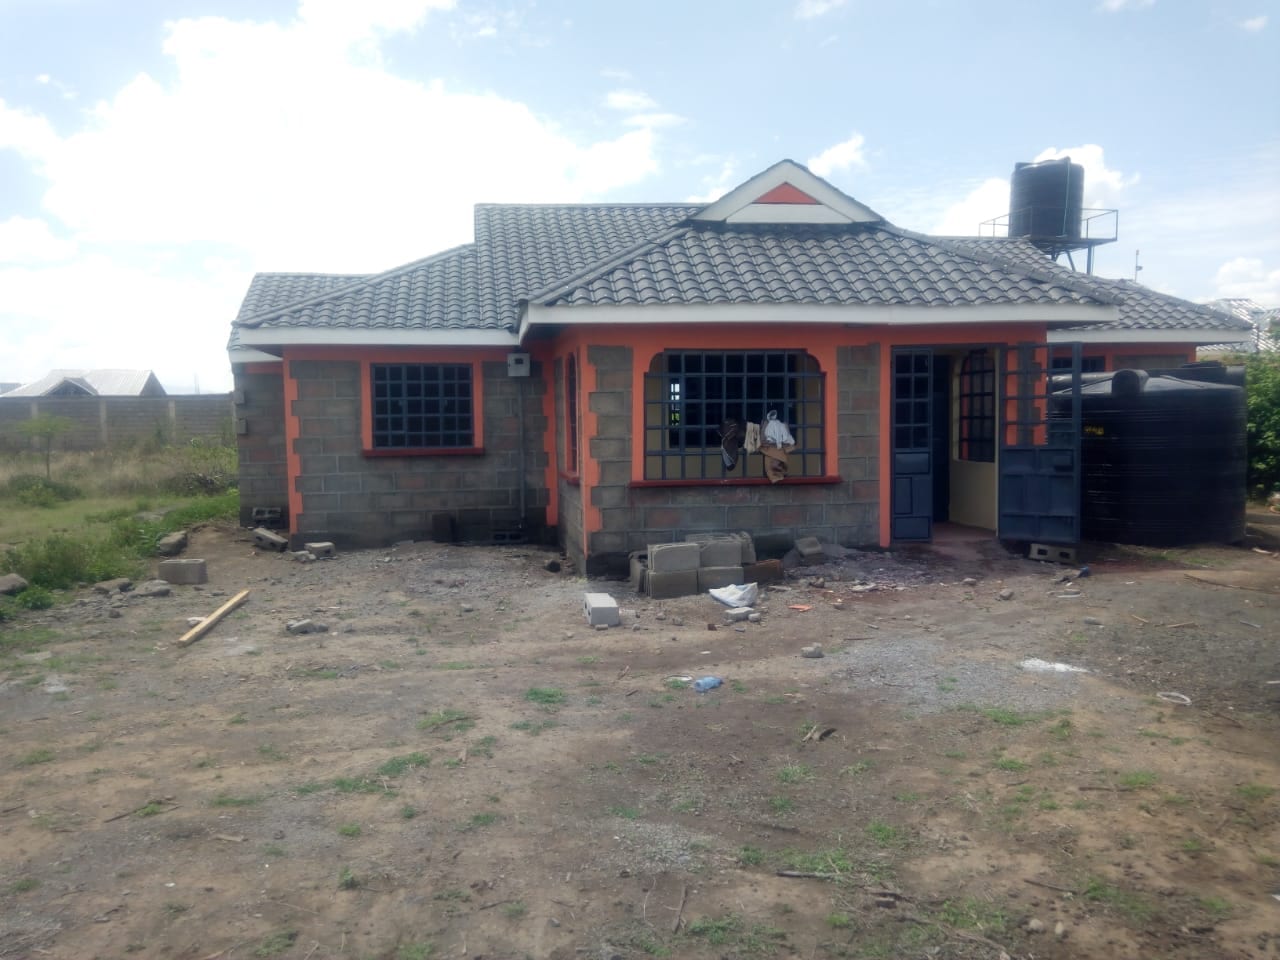 Hollow Blocks Making home ownership affordable in Kenya 